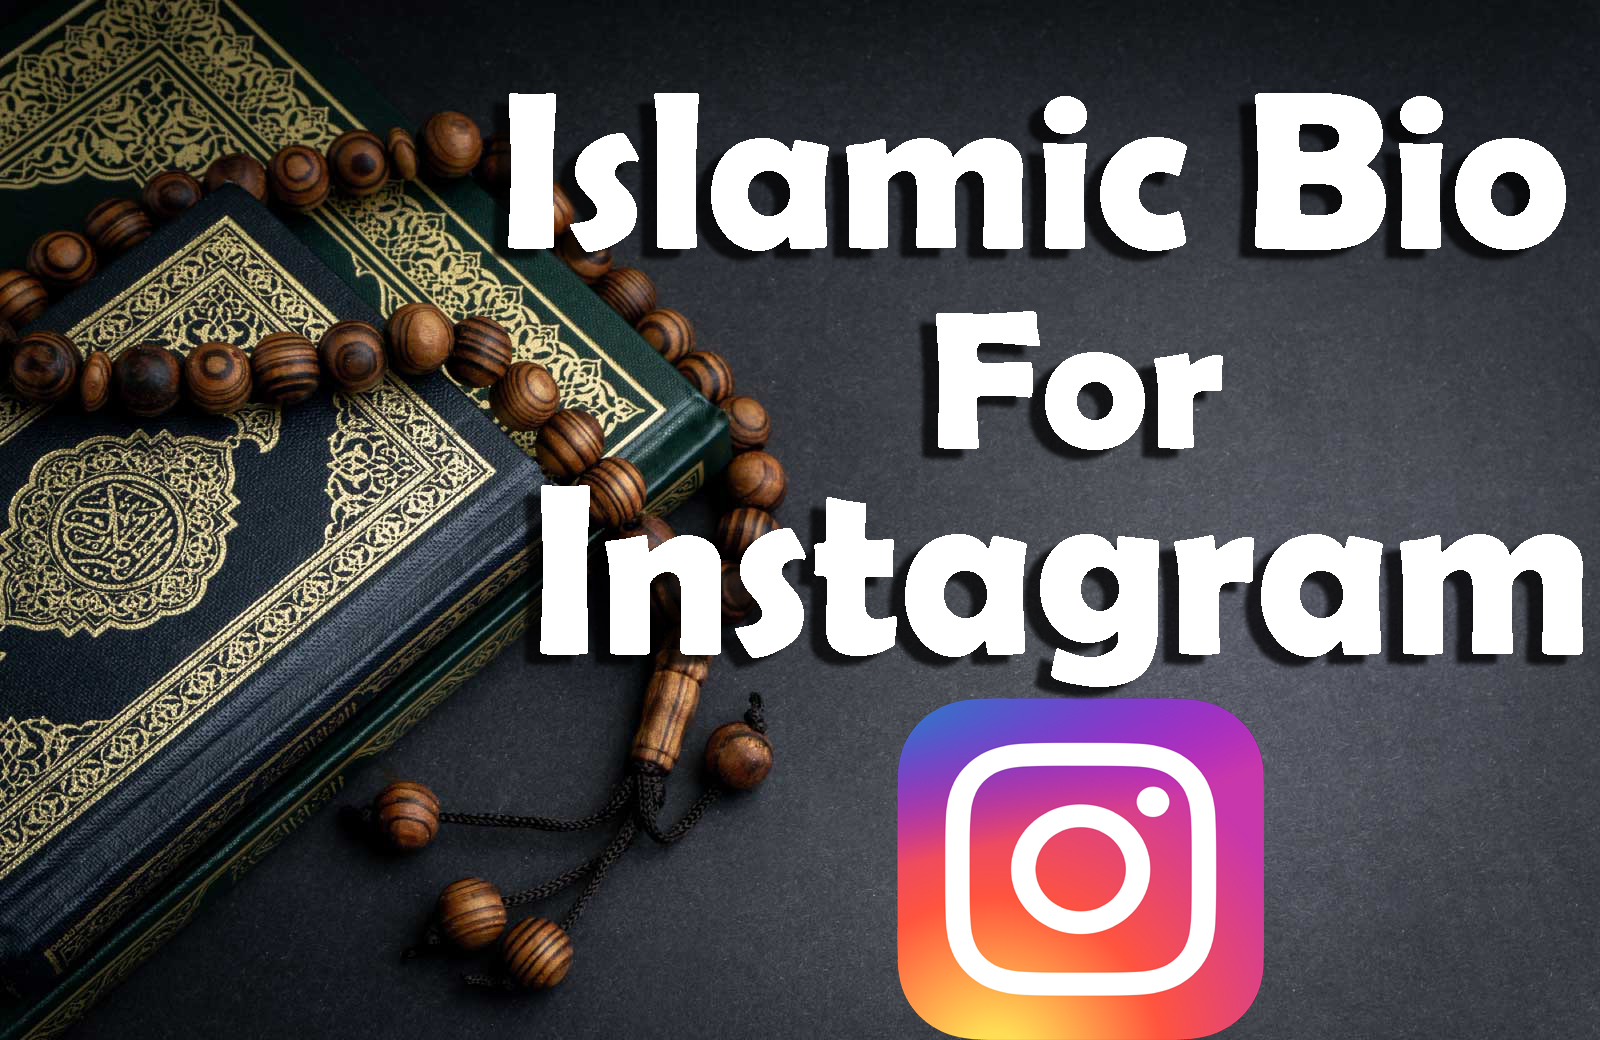 Best 150+] Islamic Bio for Instagram | Muslim Bio for Instagram - NowinHindi